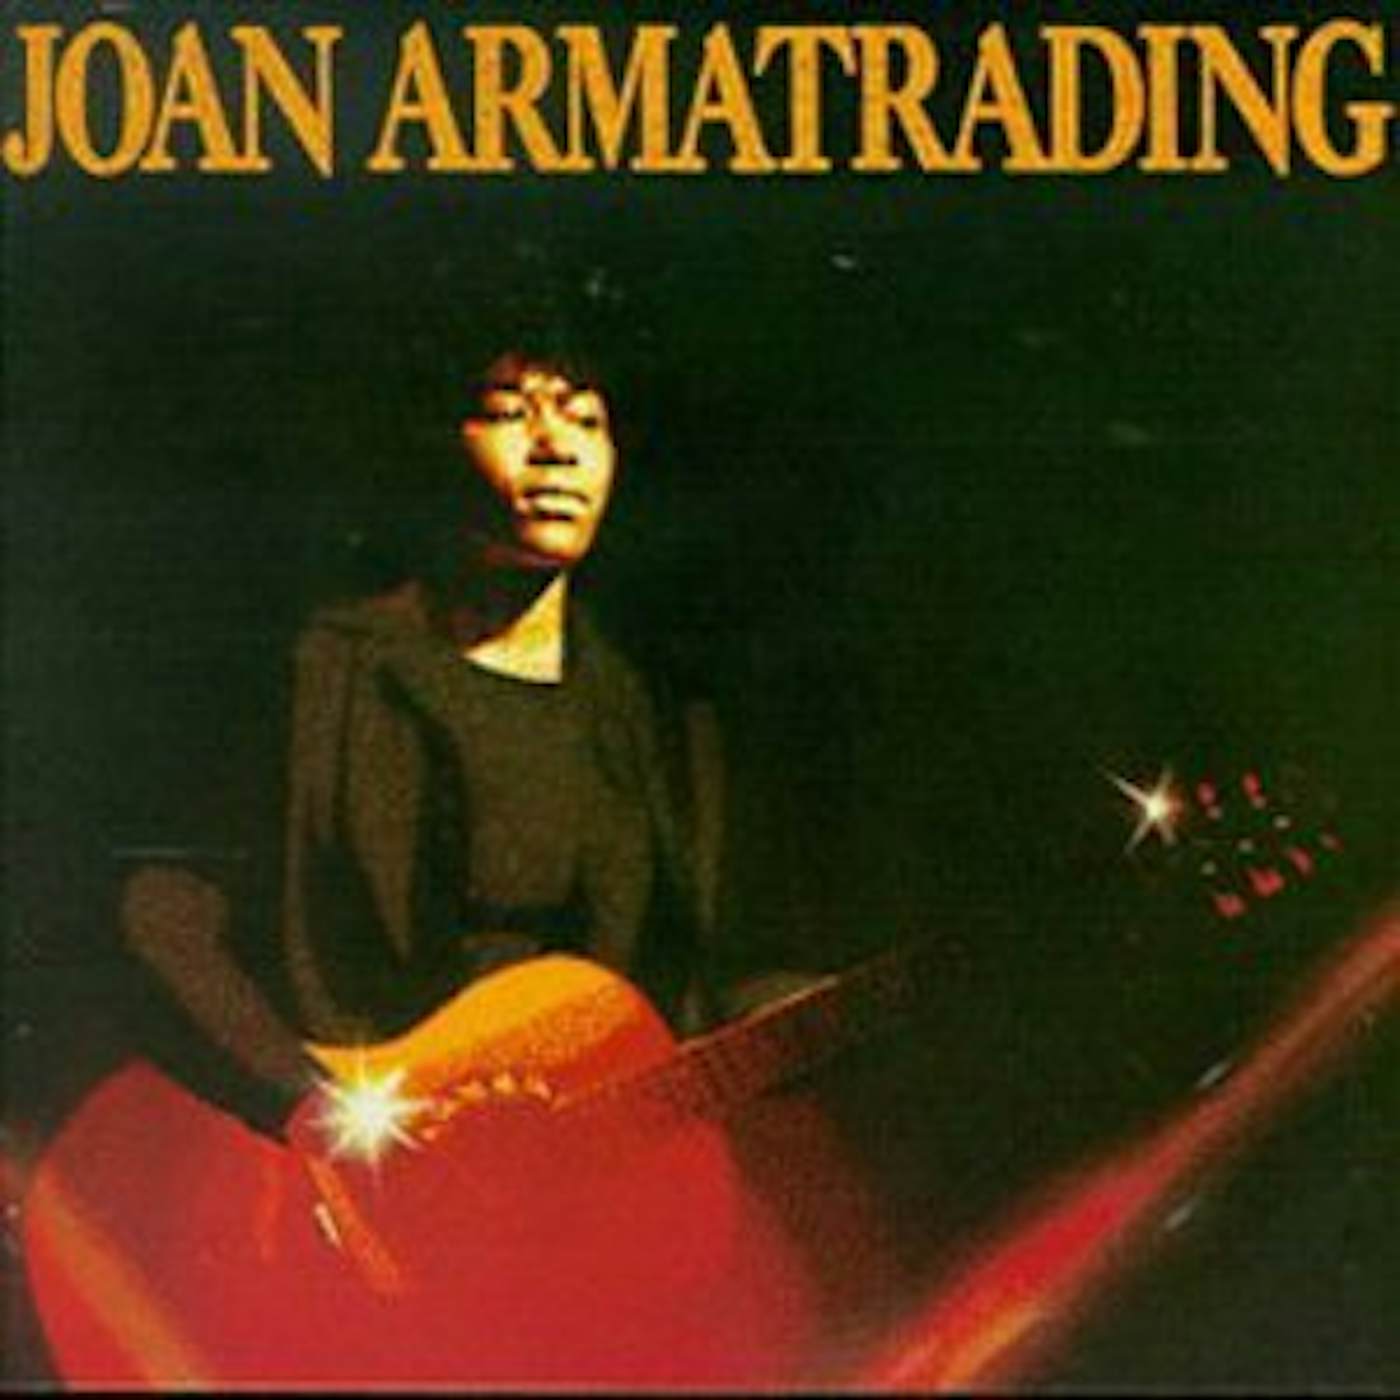 Joan Armatrading Vinyl Record